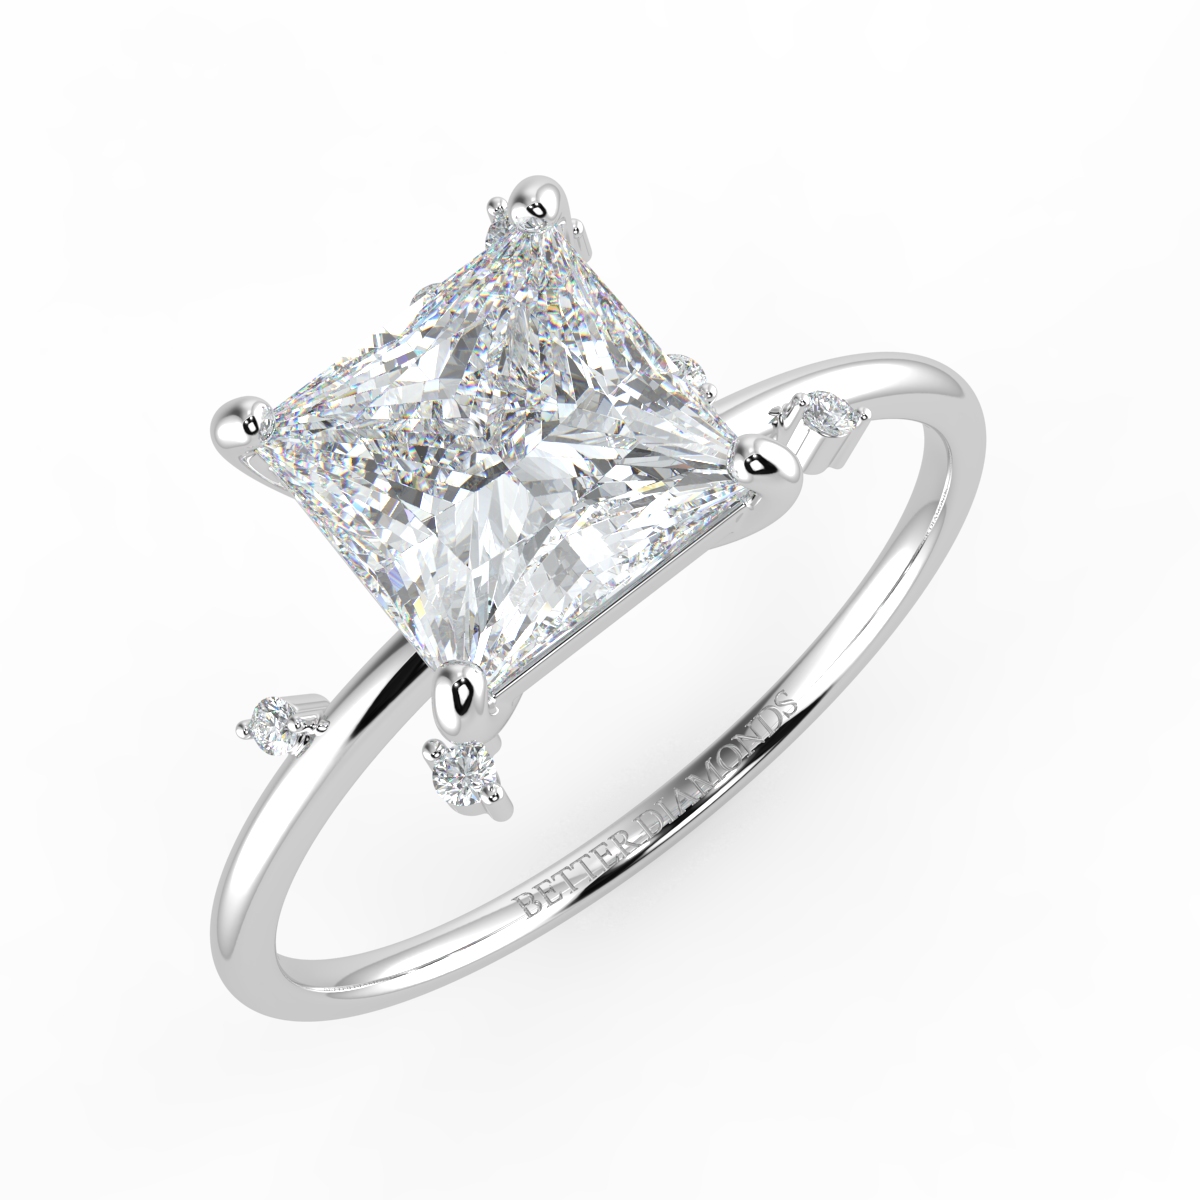 Exquisite Princess Cut Diamond Solitaire Engagement Ring